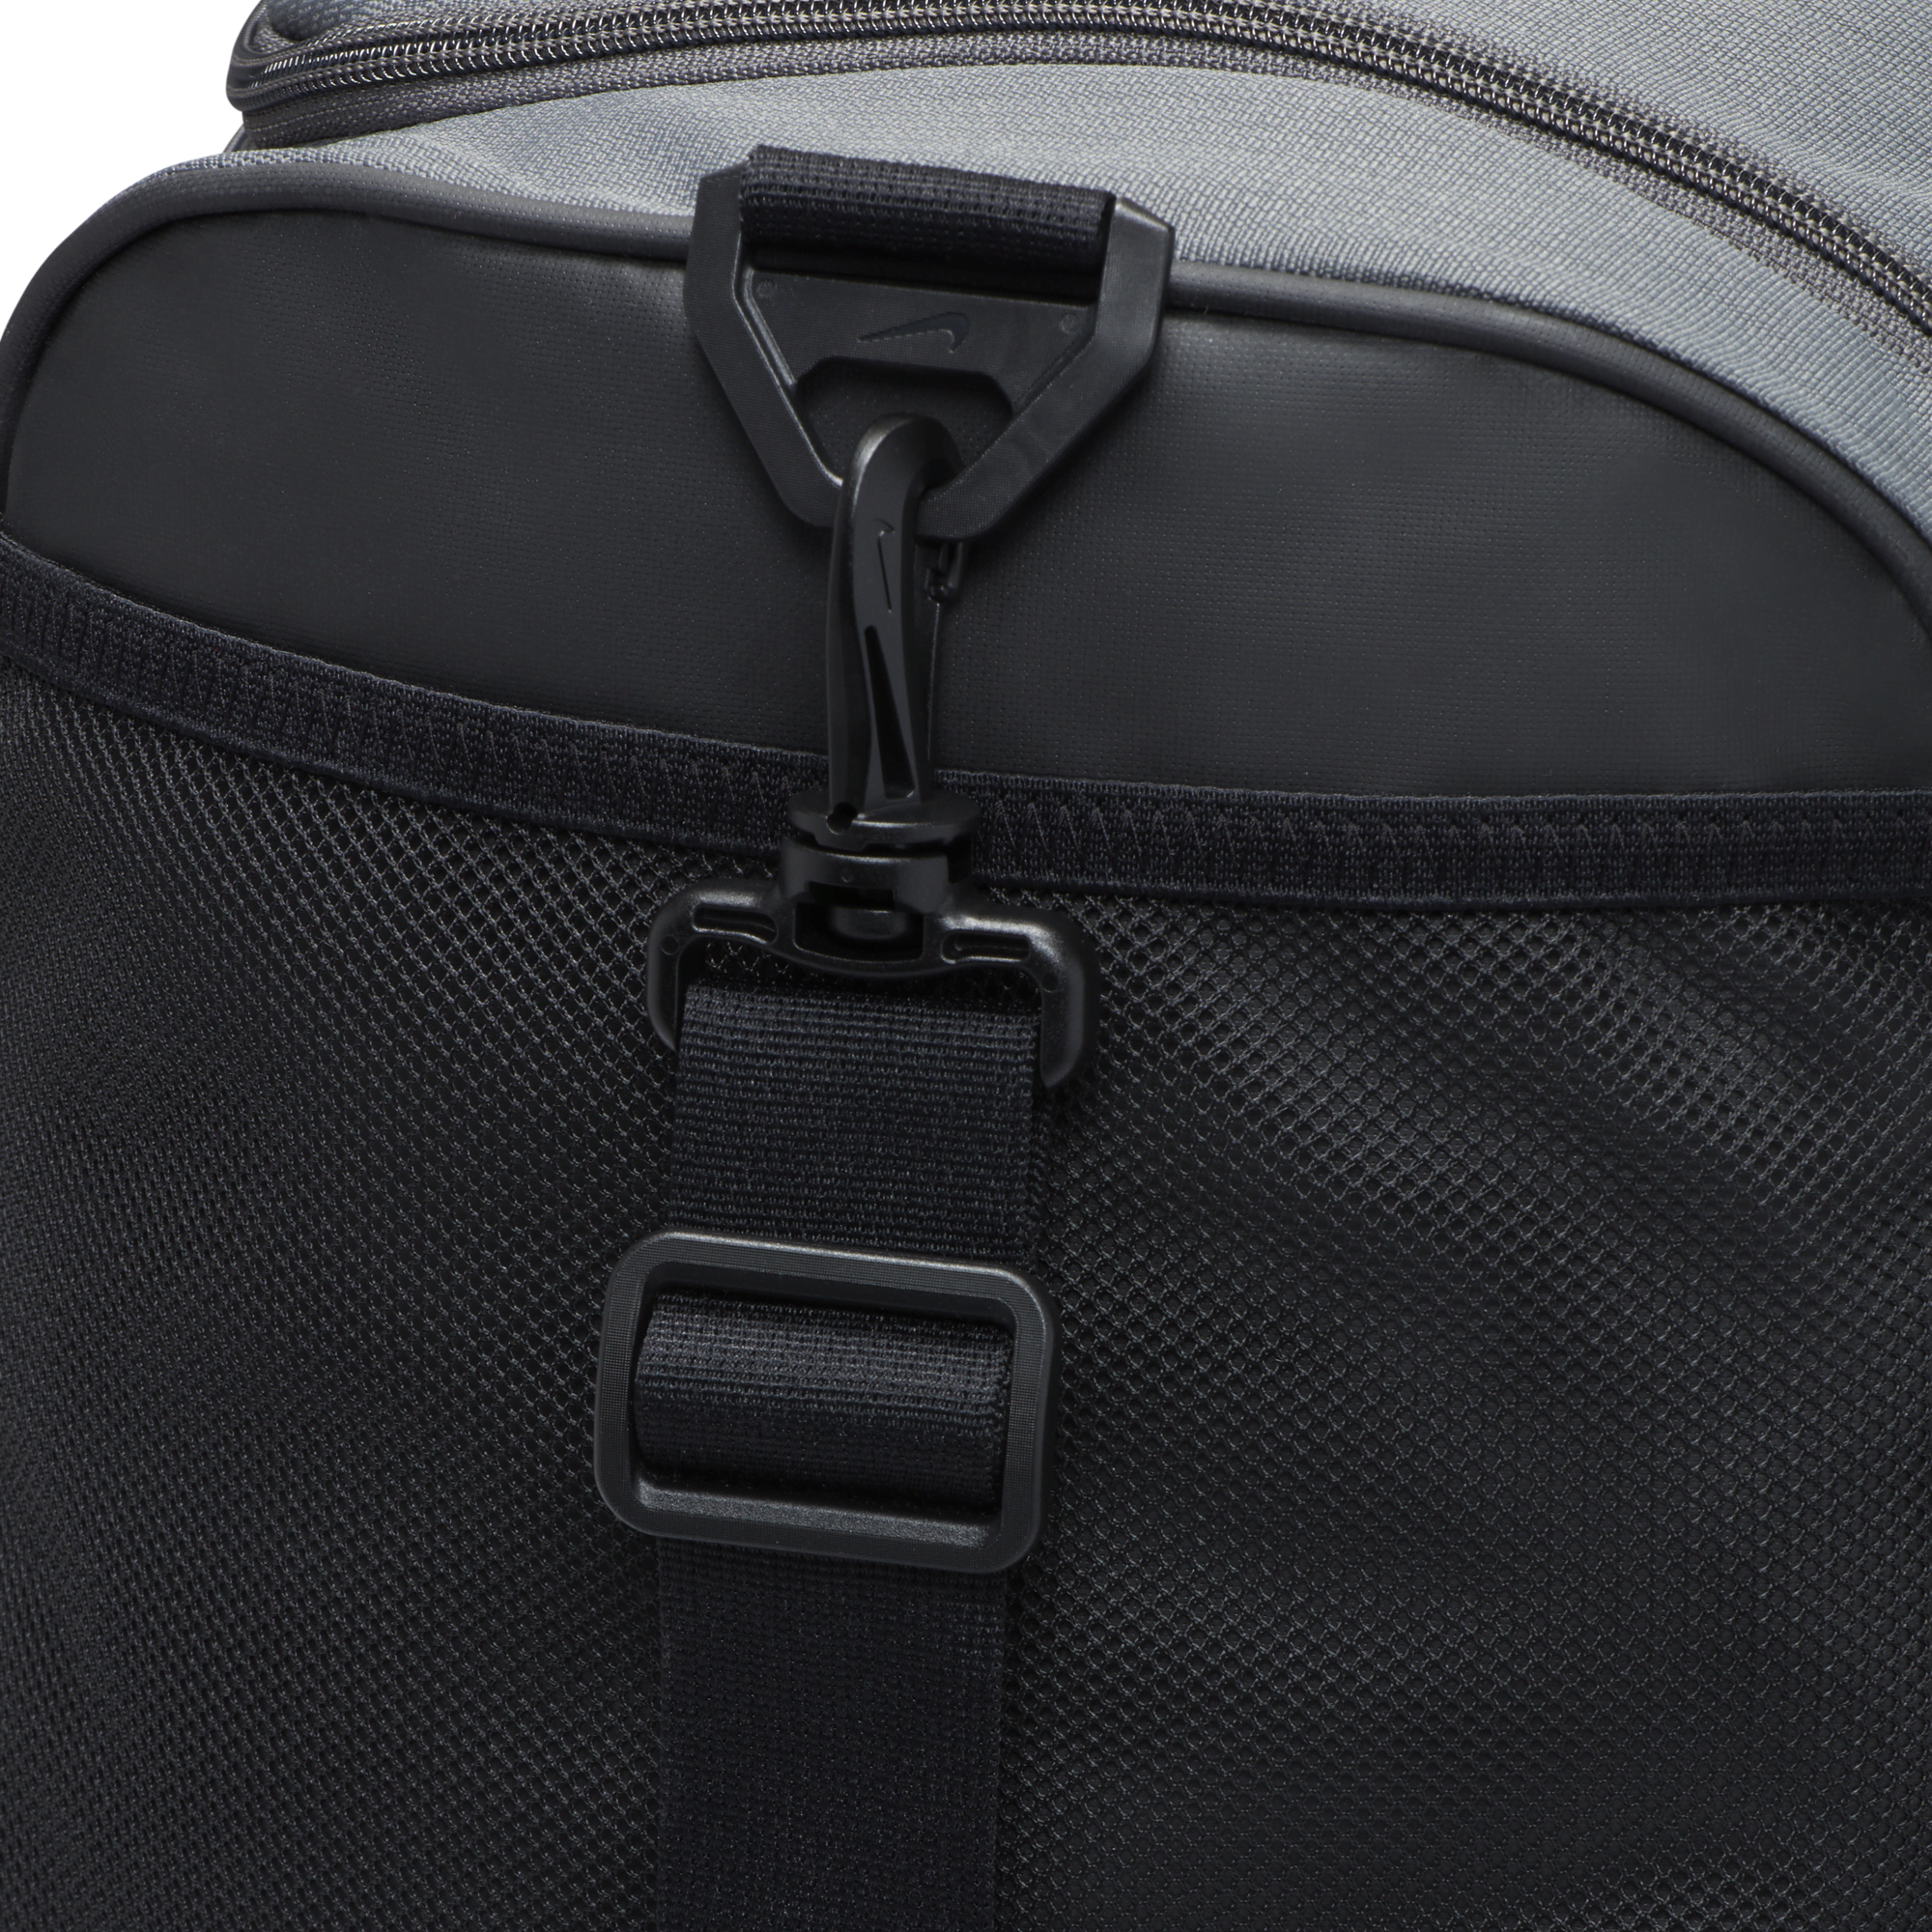 Nike Brasilia 9.5 Training Duffel Bag (Medium, 60L) - Grey, DH7710-026